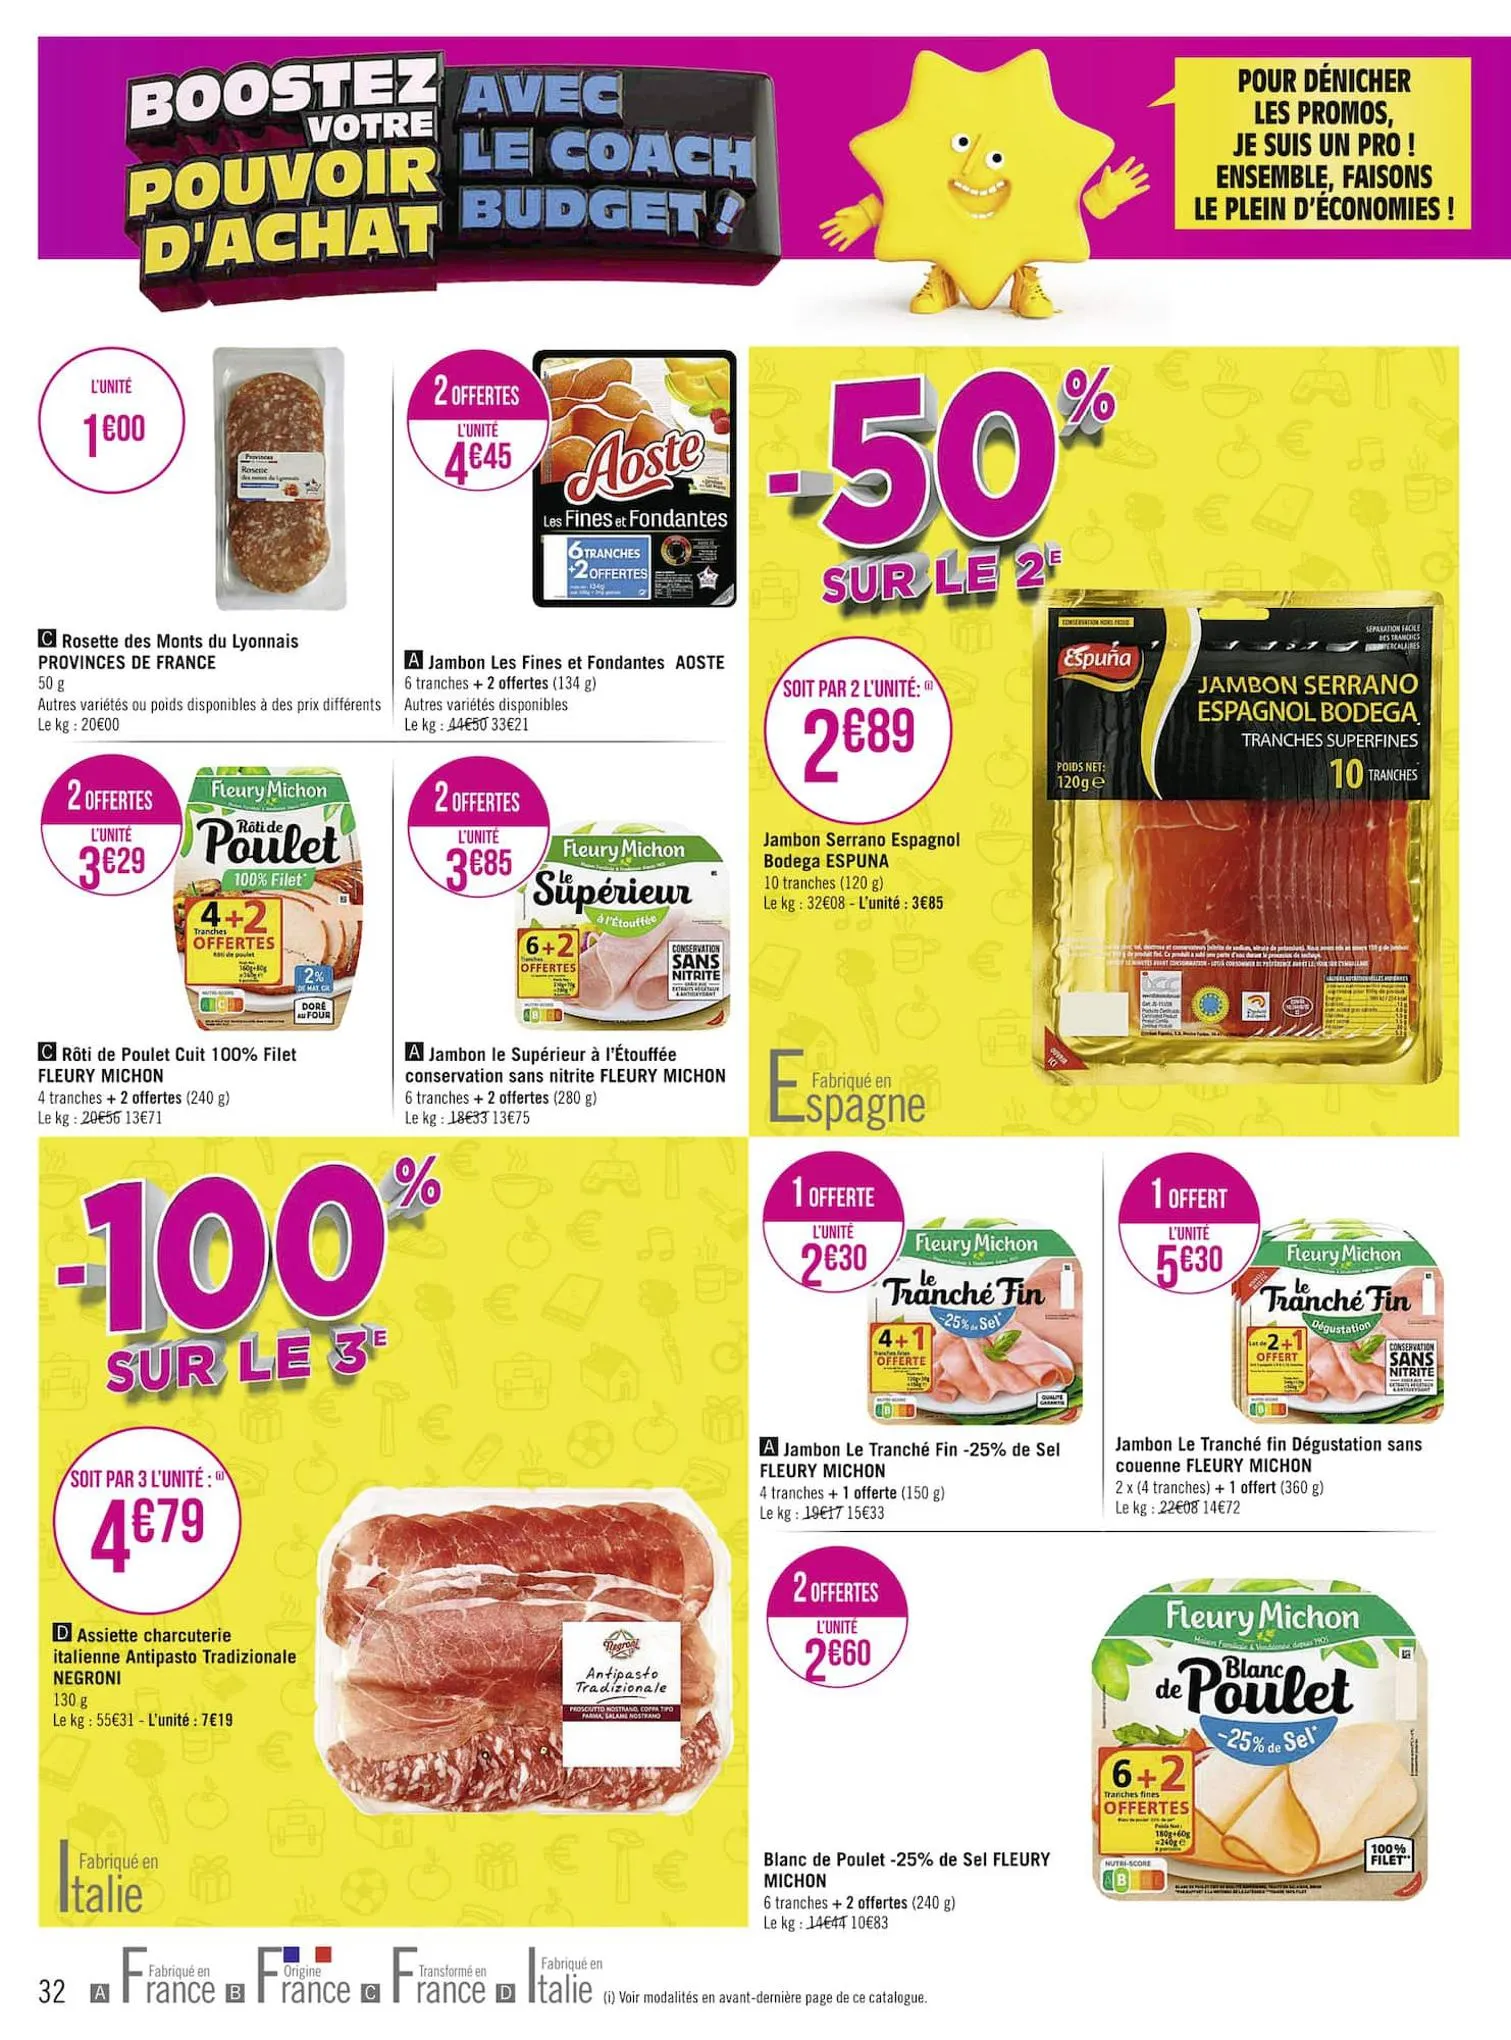 Catalogue Les coachs shopping, page 00032